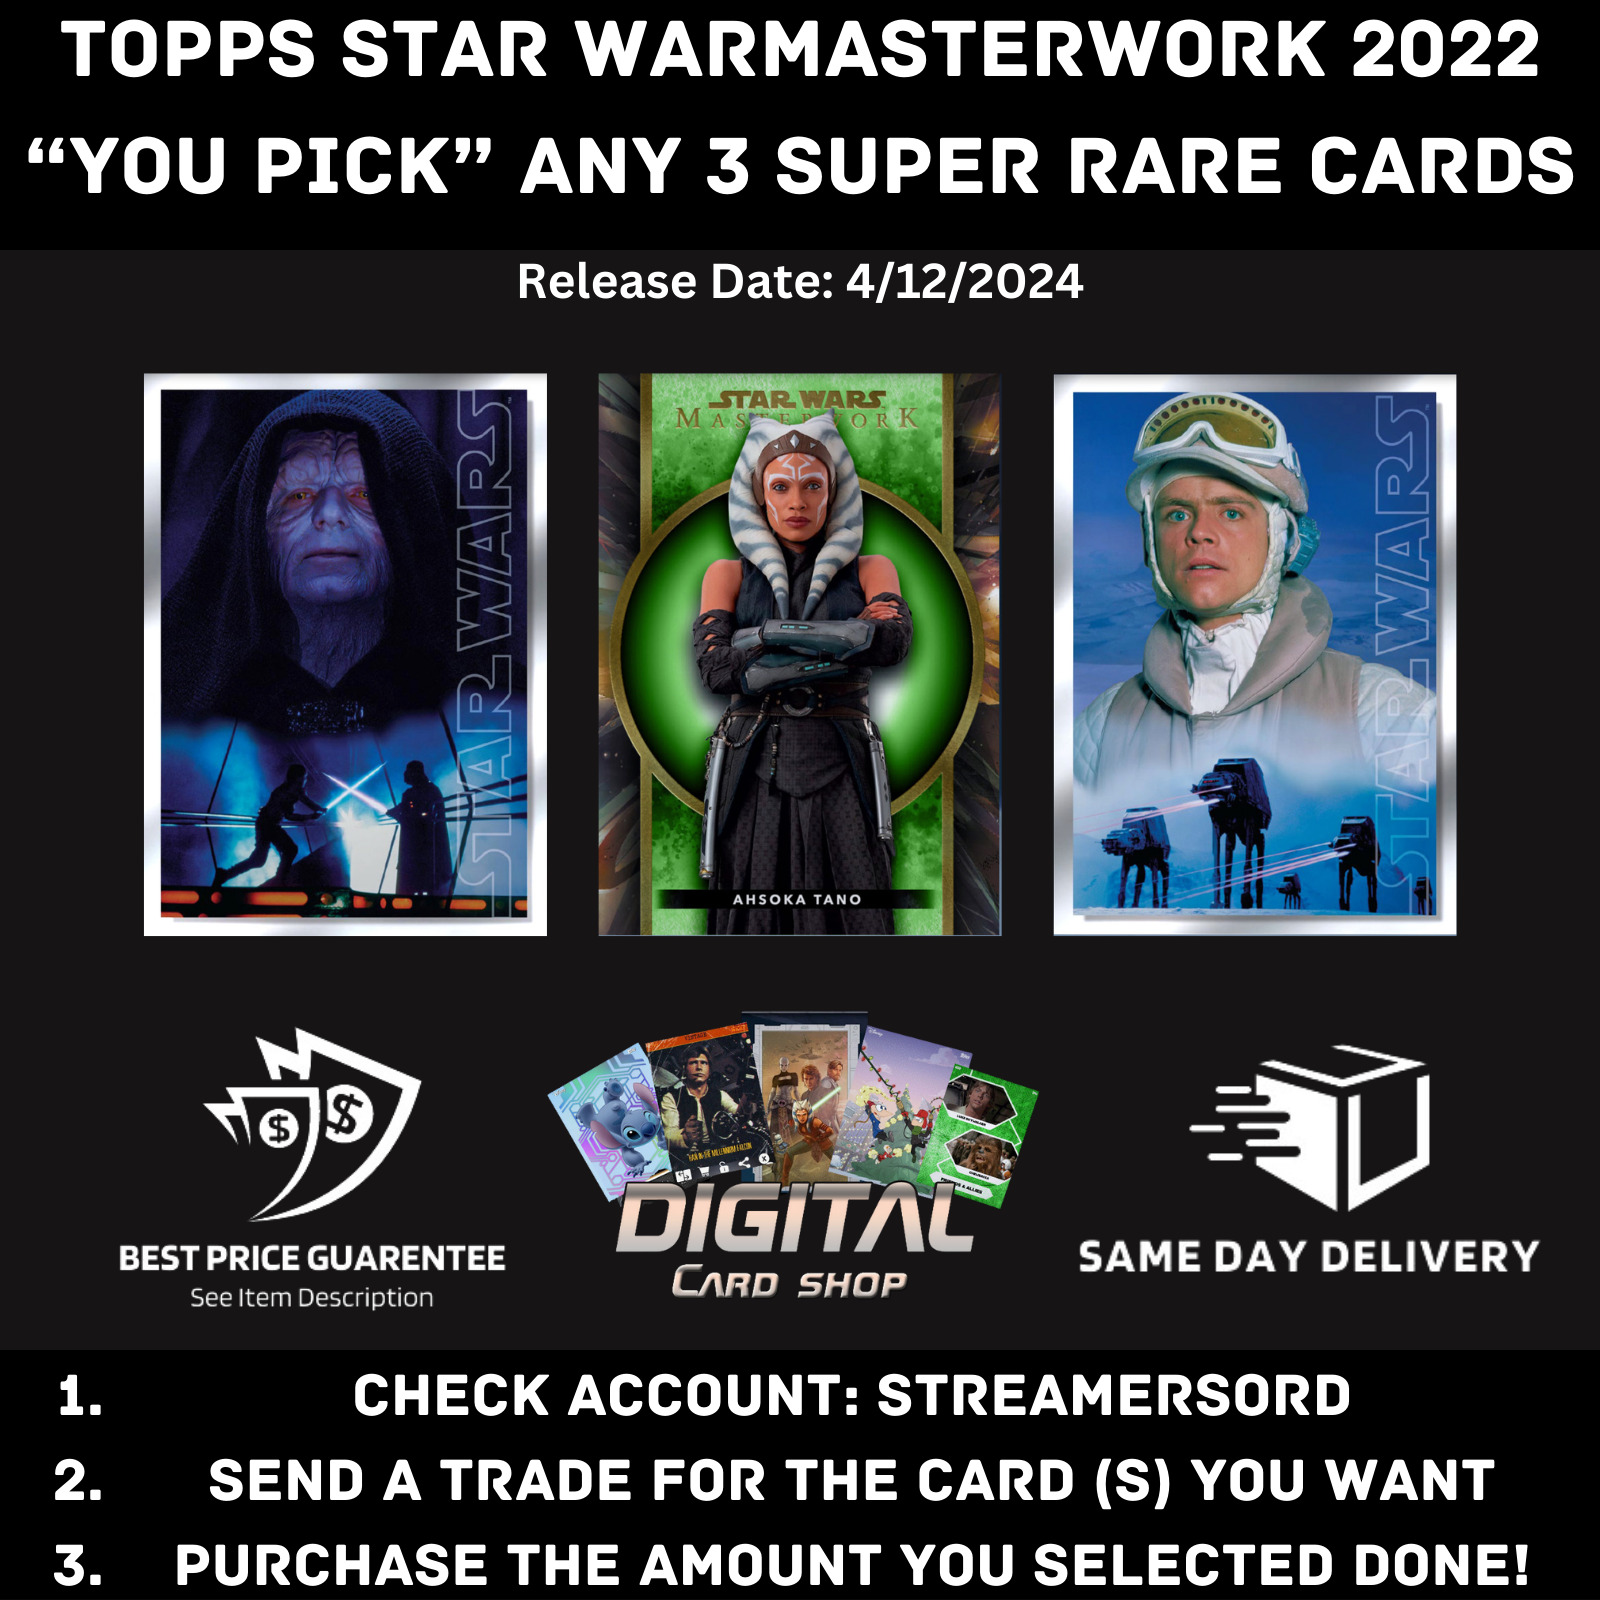 Topps Star Wars Card Trader Masterwork 2022 - YOU PICK any 3 Super Rare Card (s)